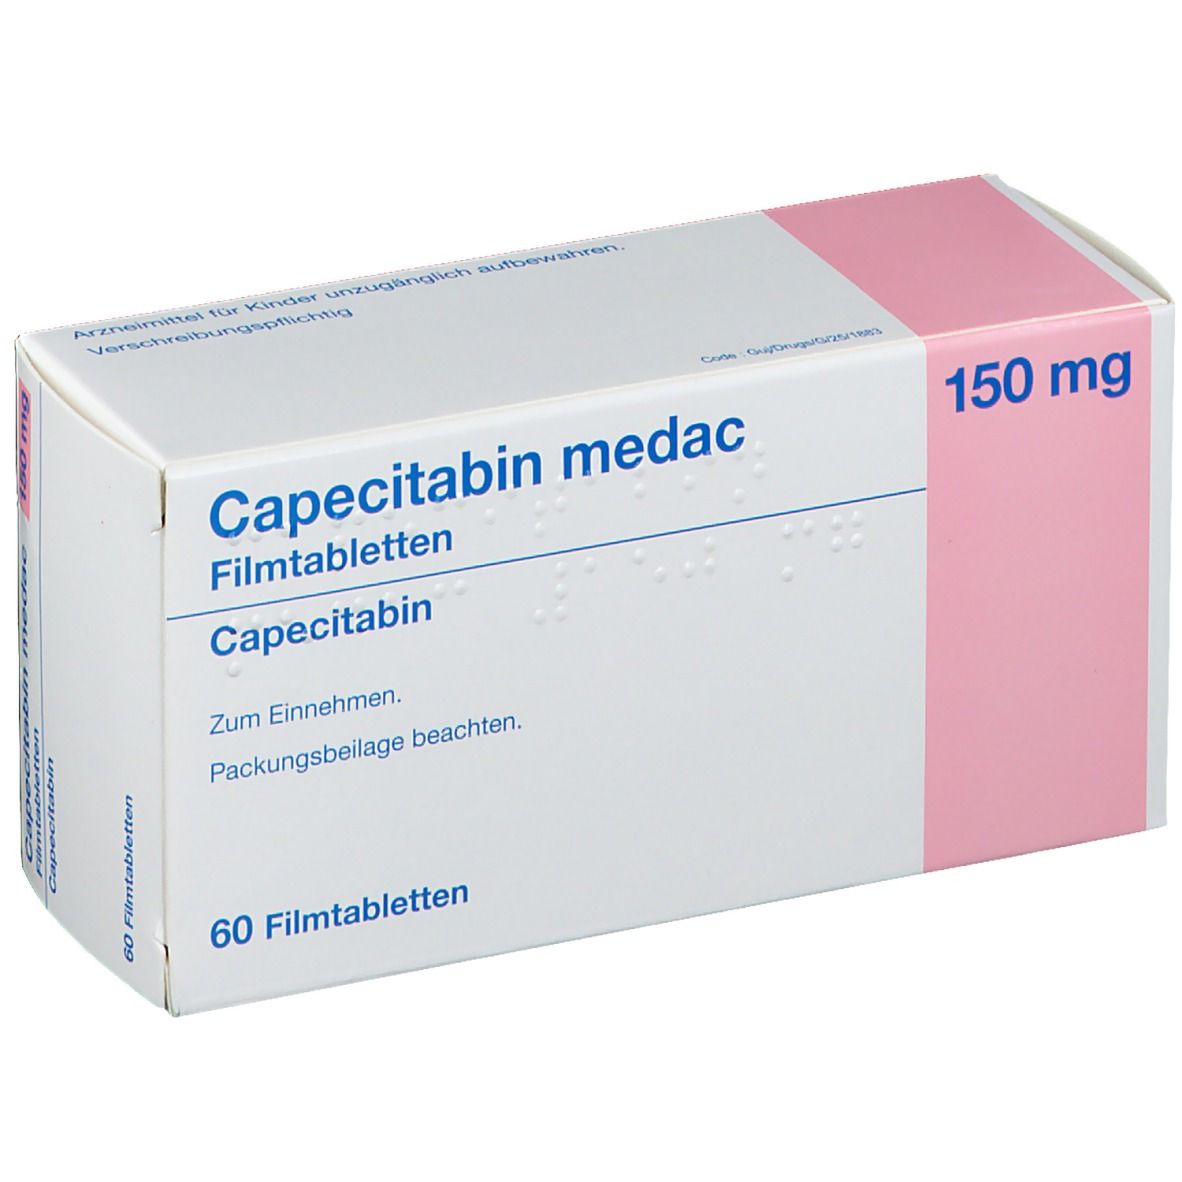 Capecitabin medac 150 mg